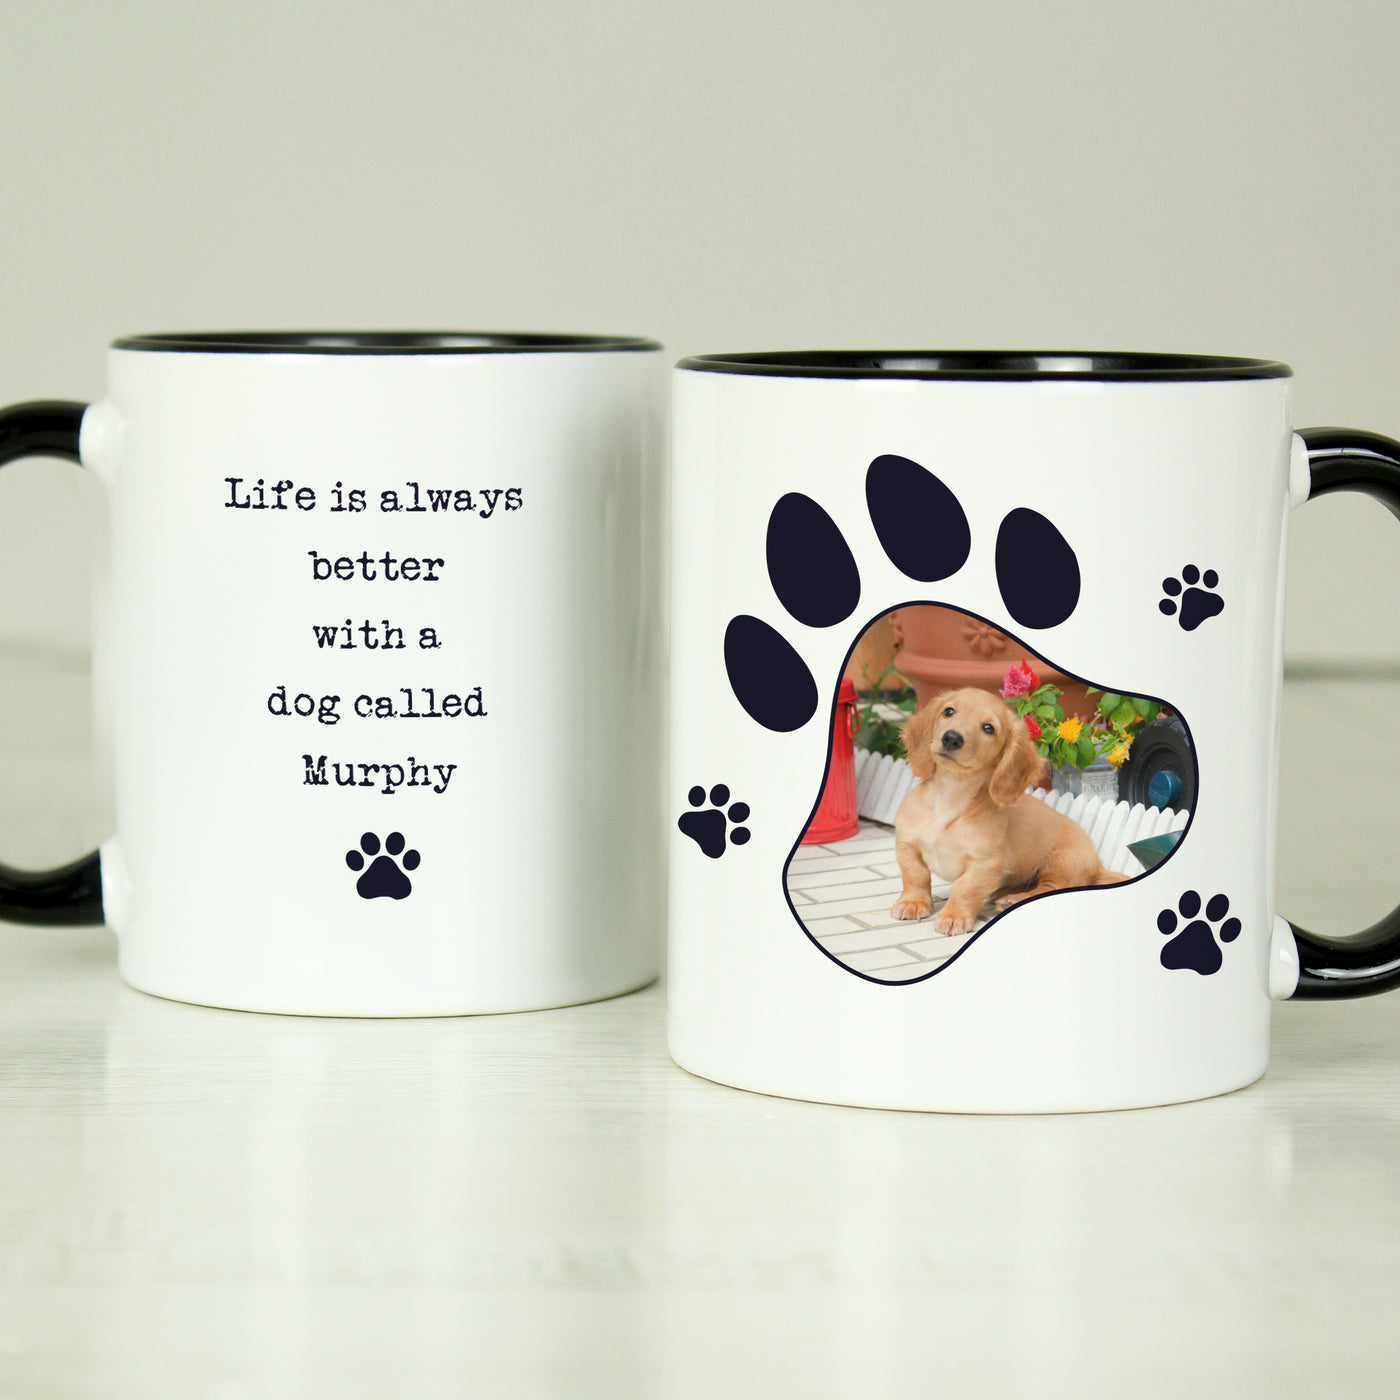 Personalised Paw Print Pet Photo Upload Black Handled Ceramic Mug